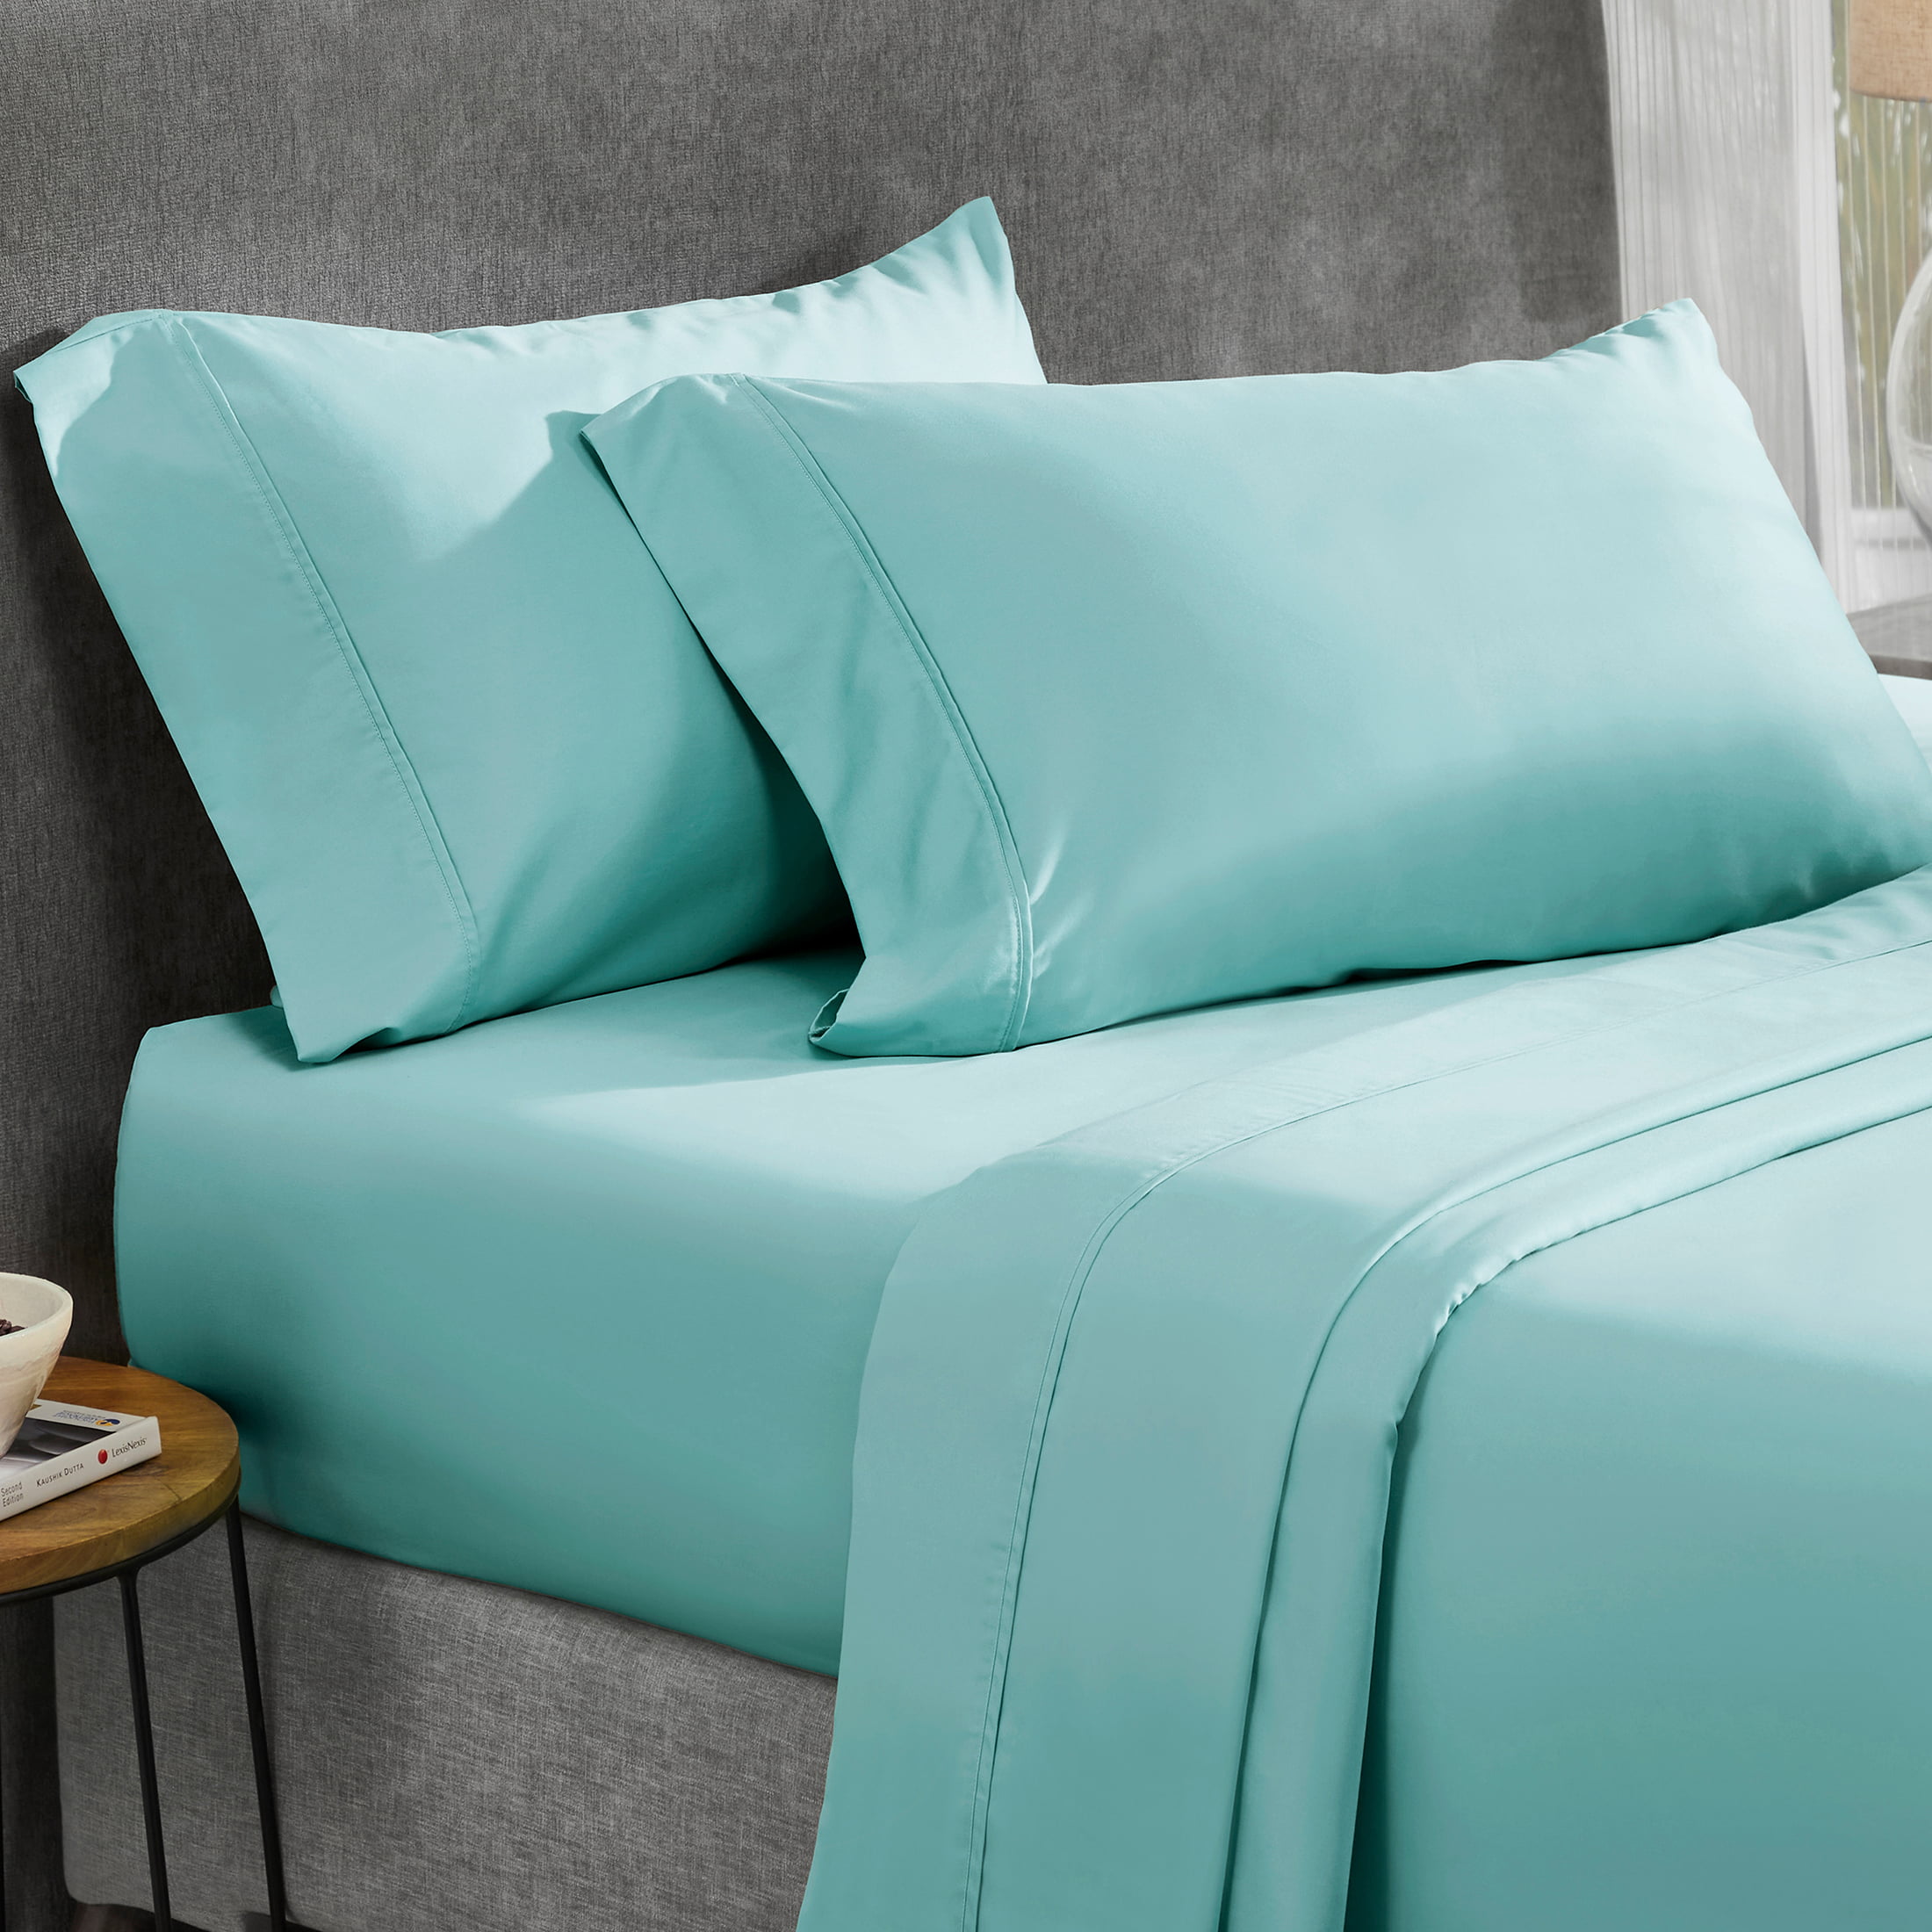 Details about   Wonderful Sky Blue Bedding Collection Solid Choose Item & Depth Pocket US Sizes 